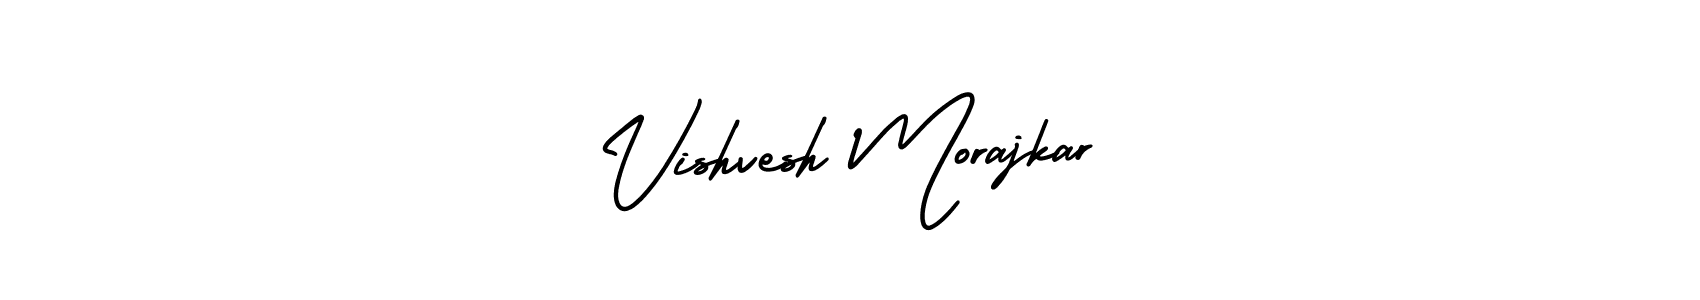 How to Draw Vishvesh Morajkar signature style? AmerikaSignatureDemo-Regular is a latest design signature styles for name Vishvesh Morajkar. Vishvesh Morajkar signature style 3 images and pictures png